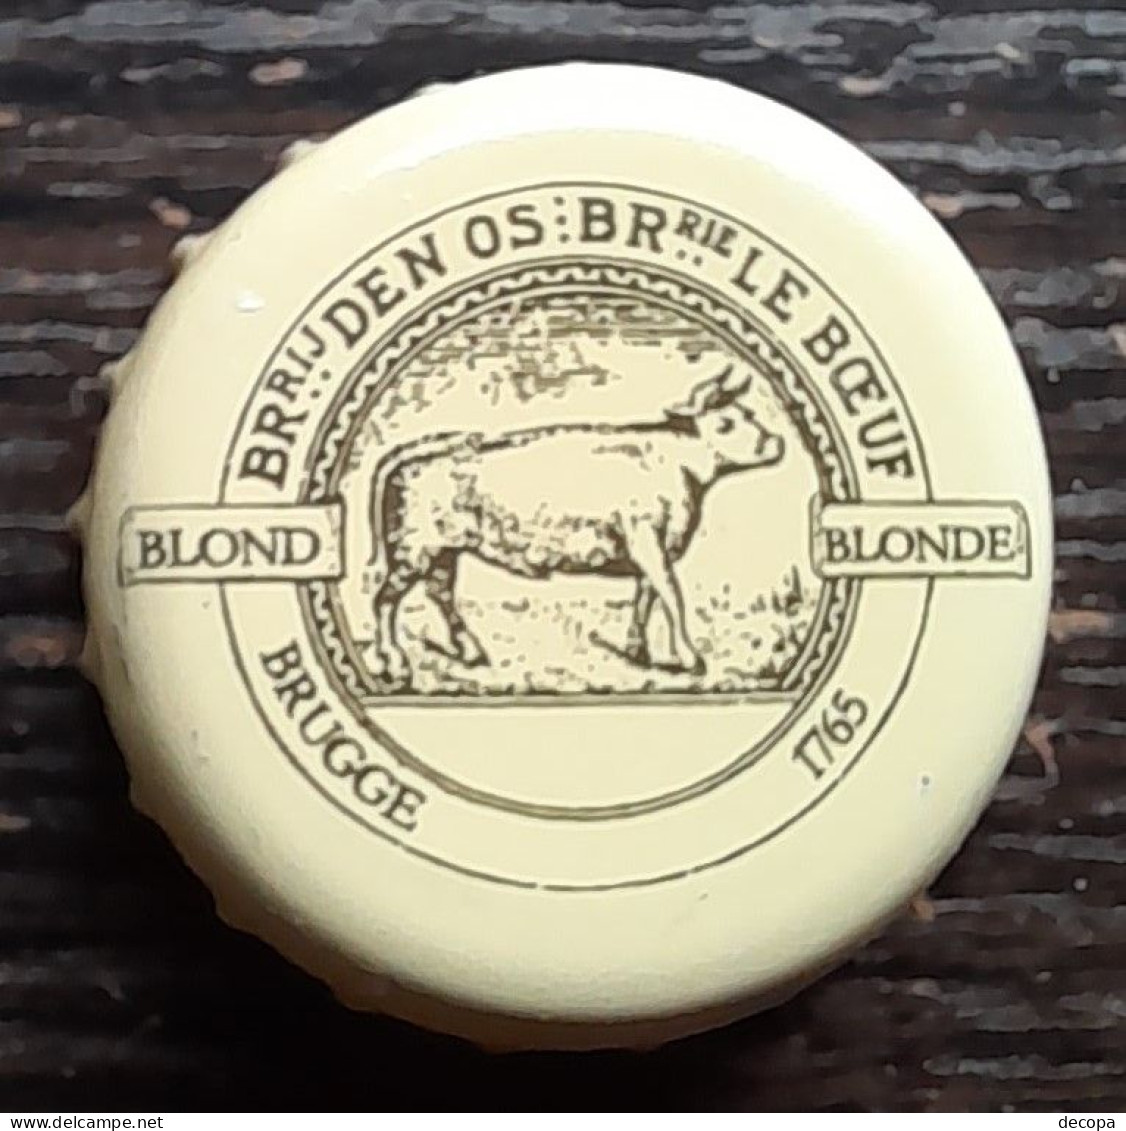 (db-308) Belgium - Belgique - België   Blonden Os -  Br. Bourgogne De Flandres  -  Brugge - Bière